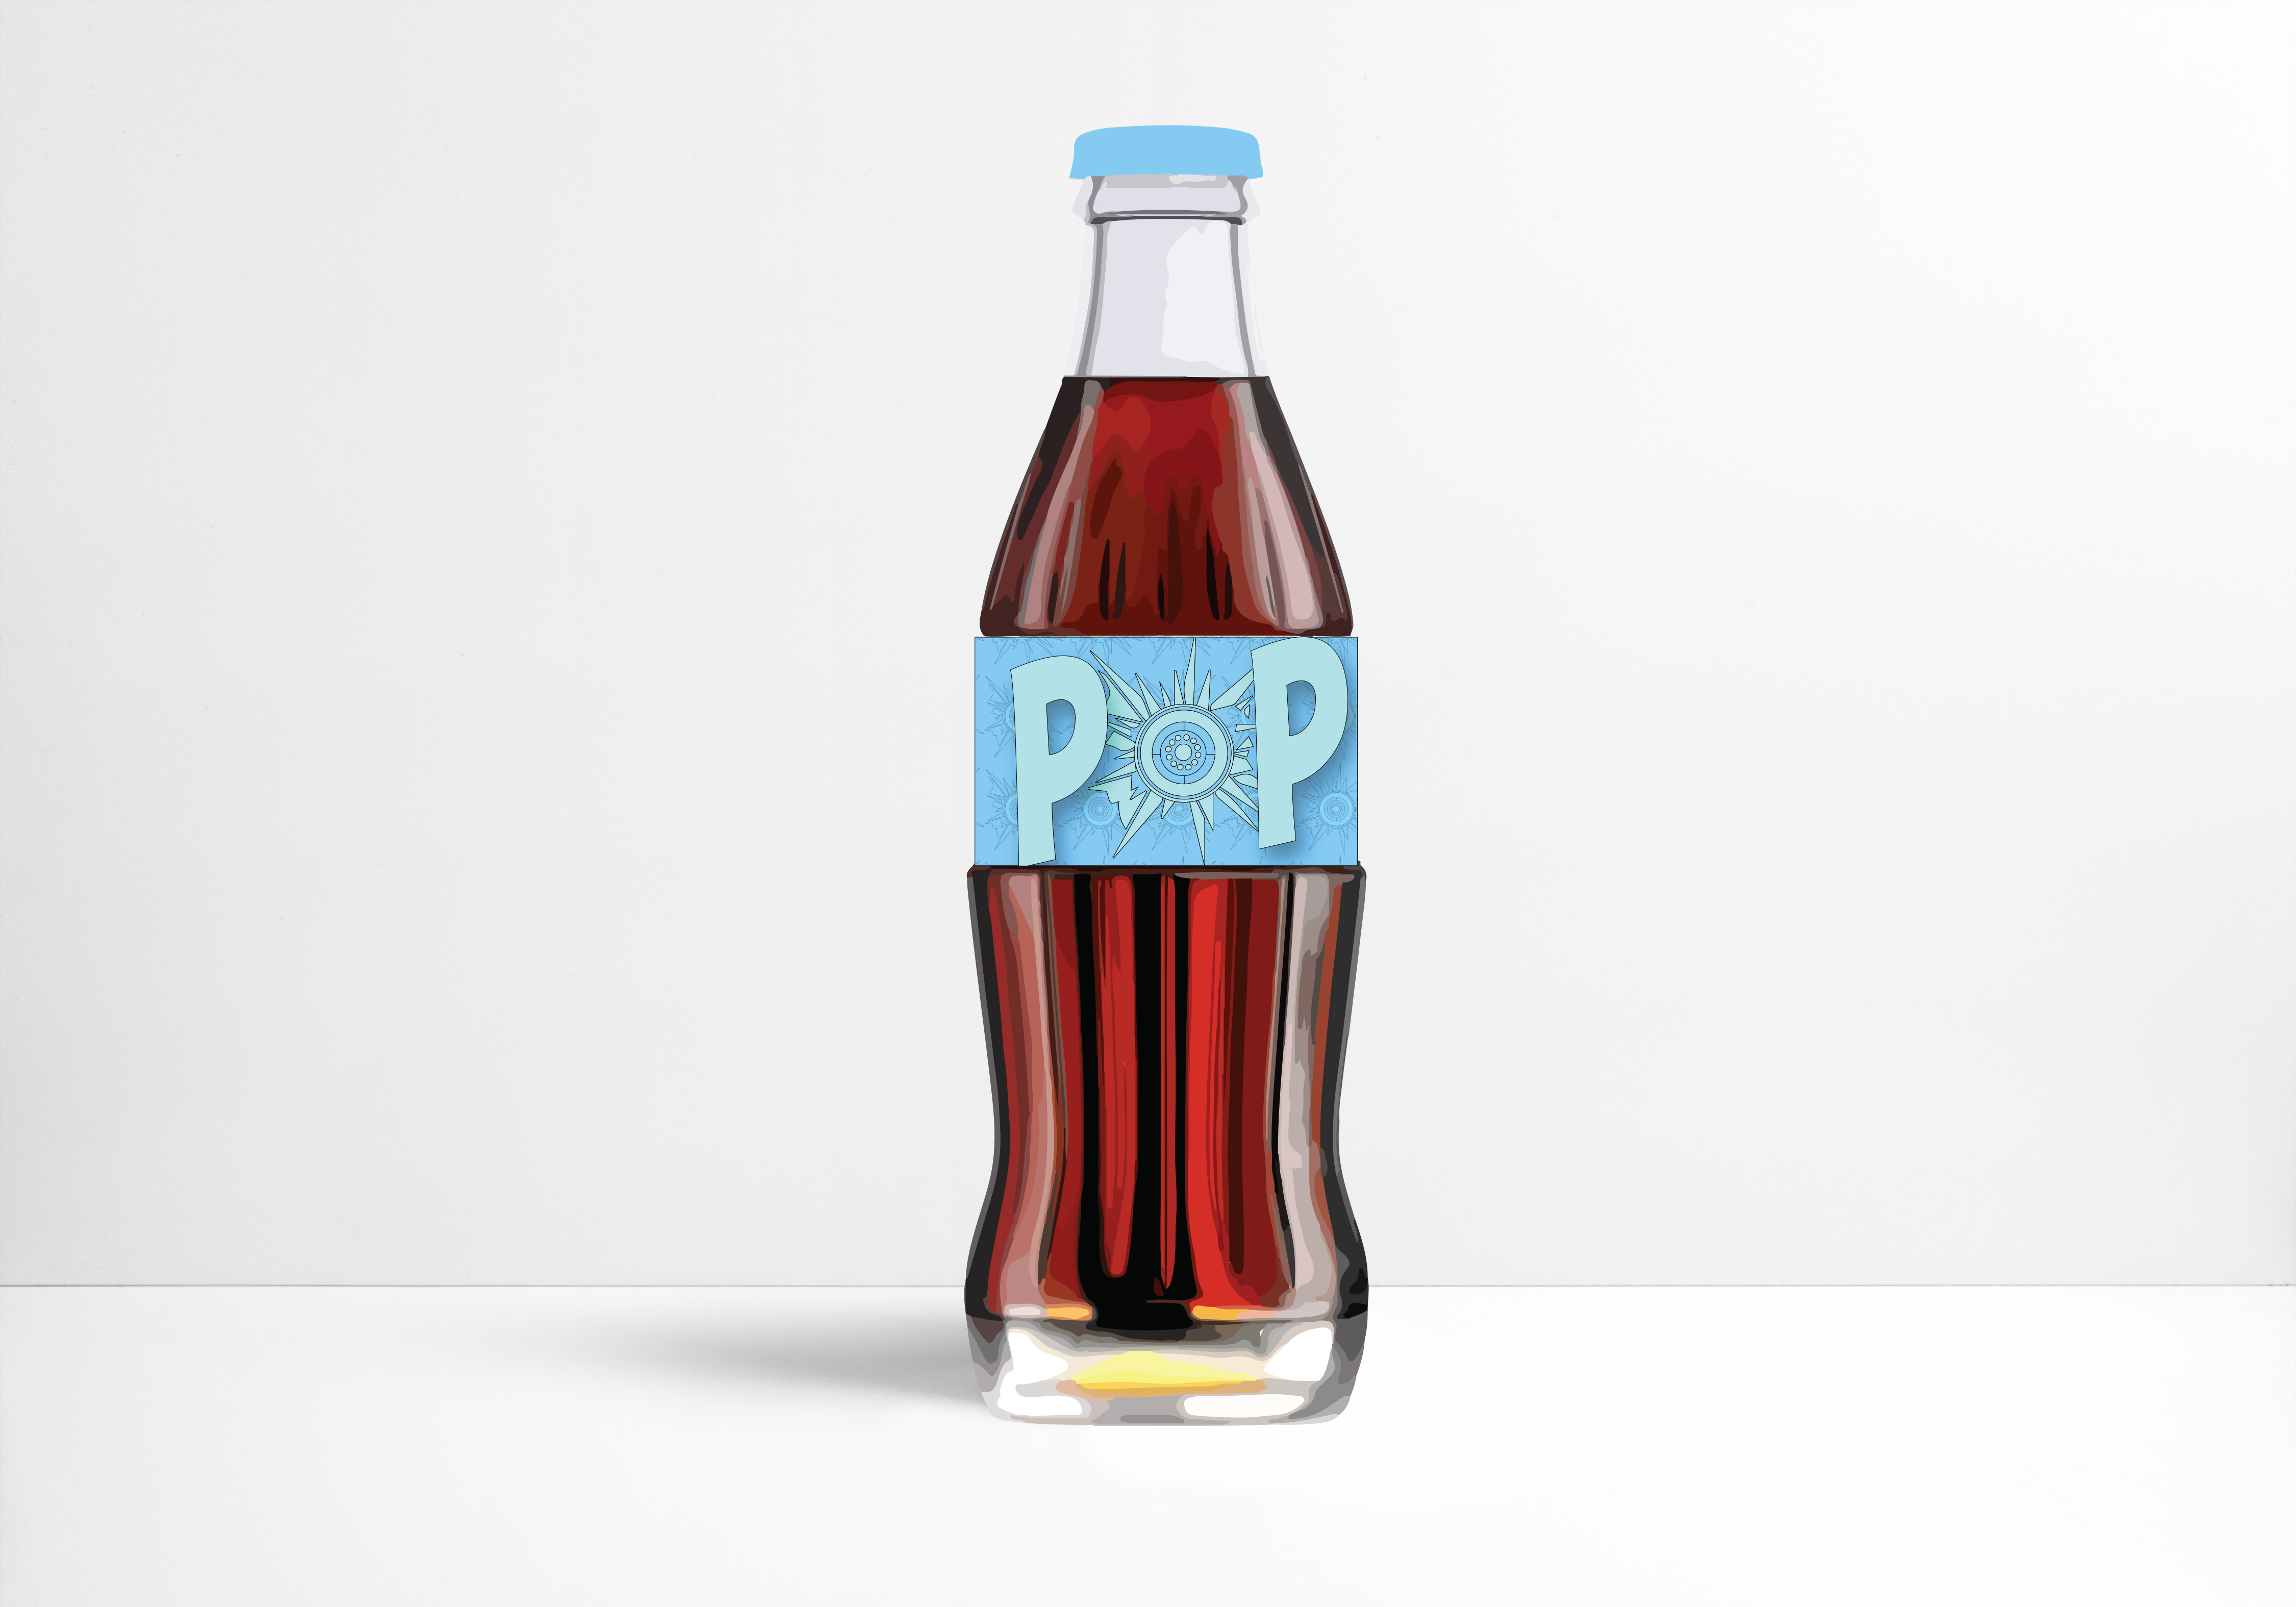 soda pop